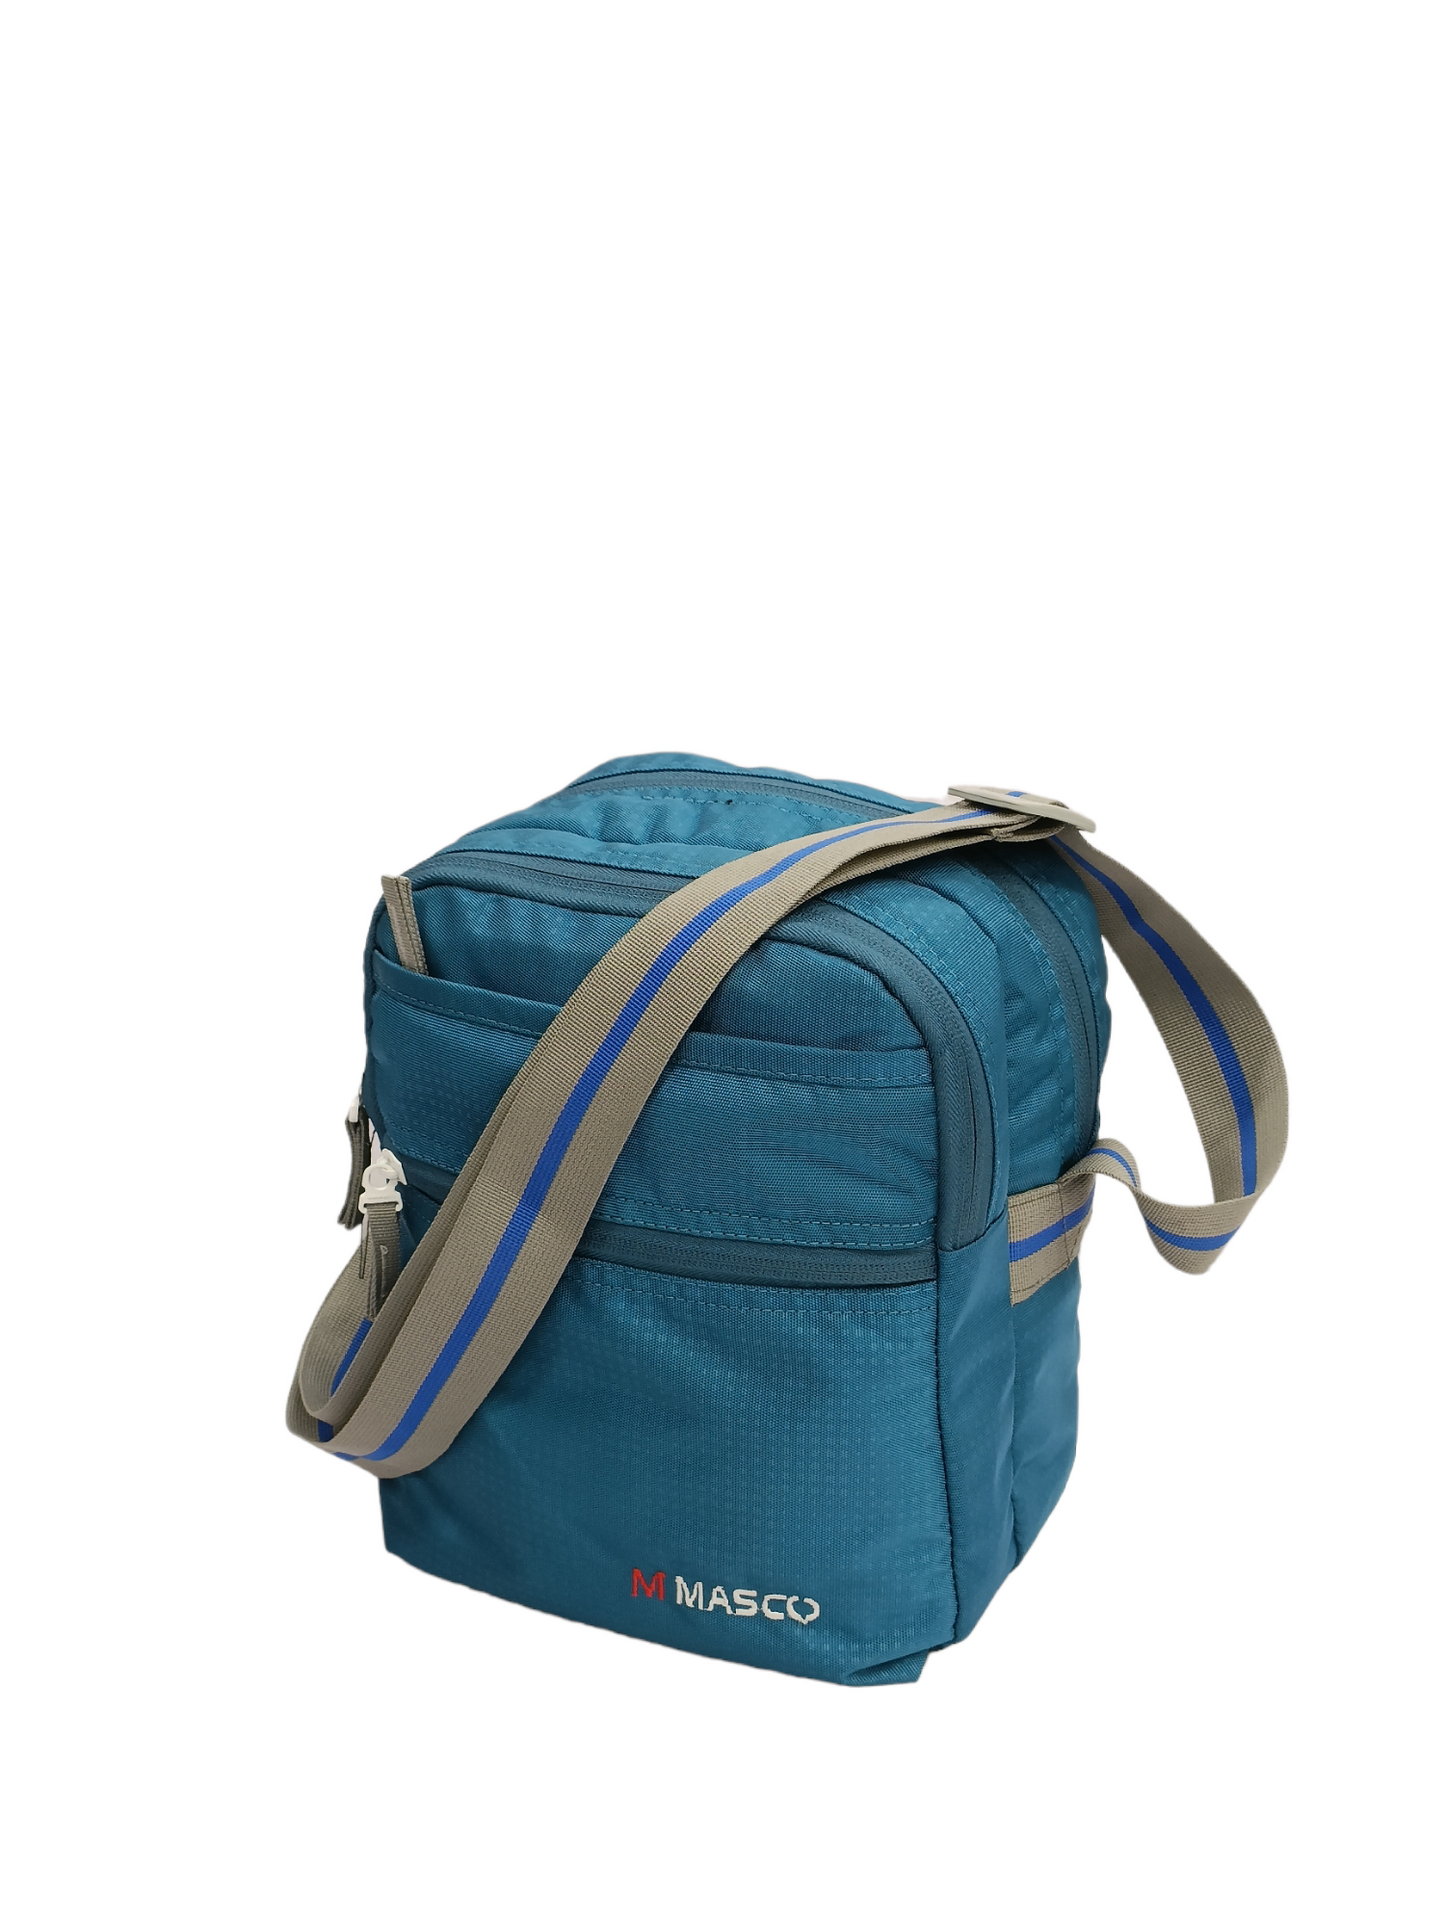 M masco big size super spacious side bag